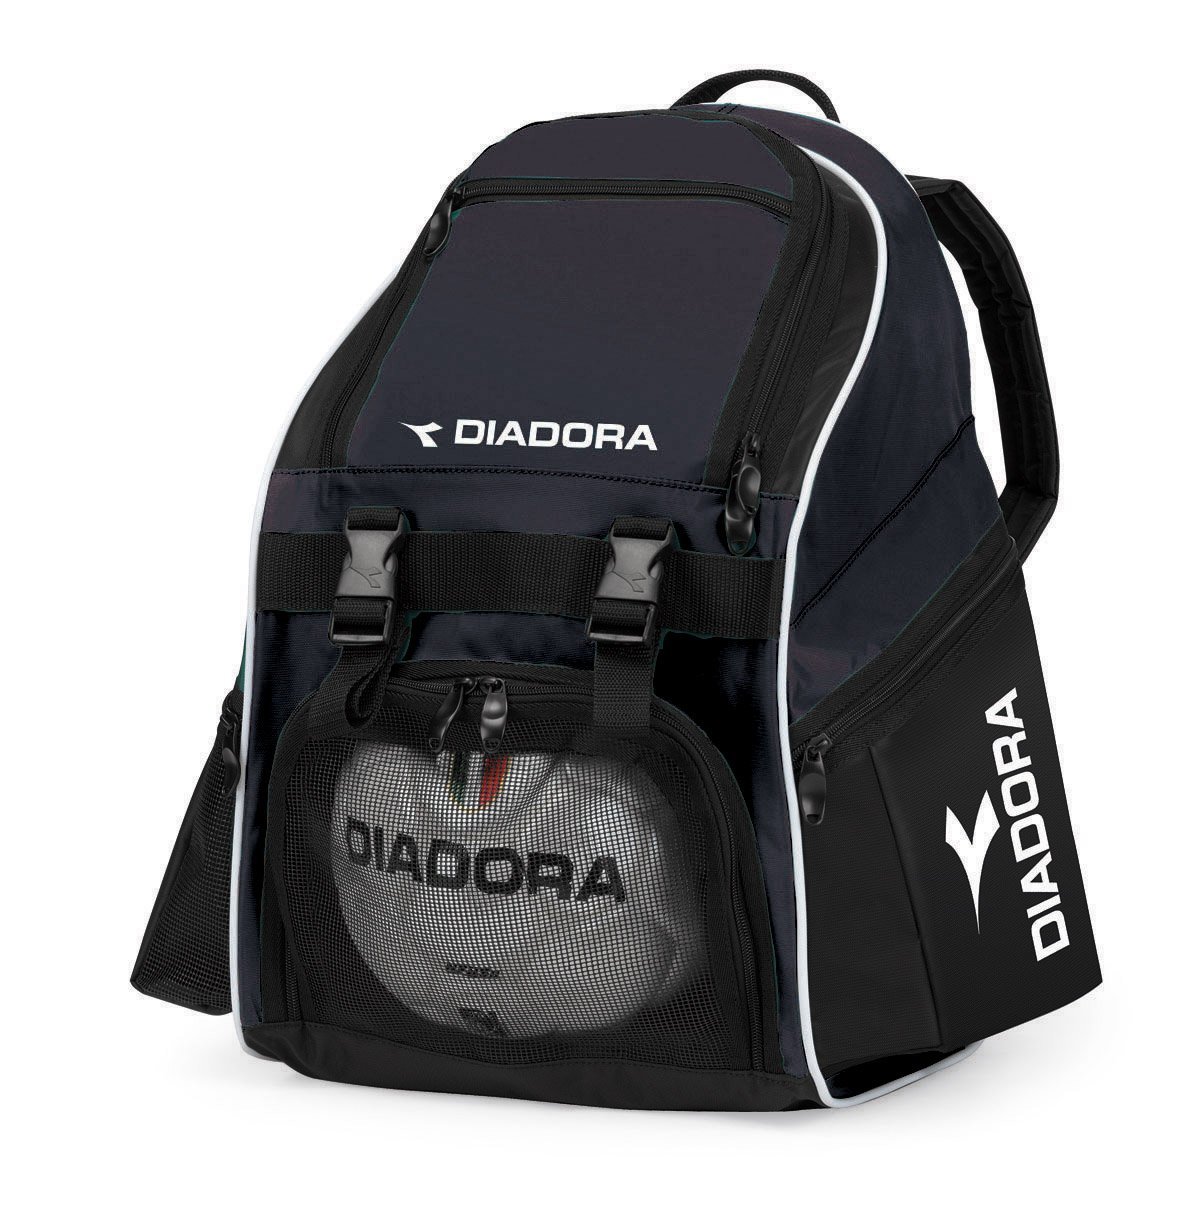 Diadora Squadra backpack